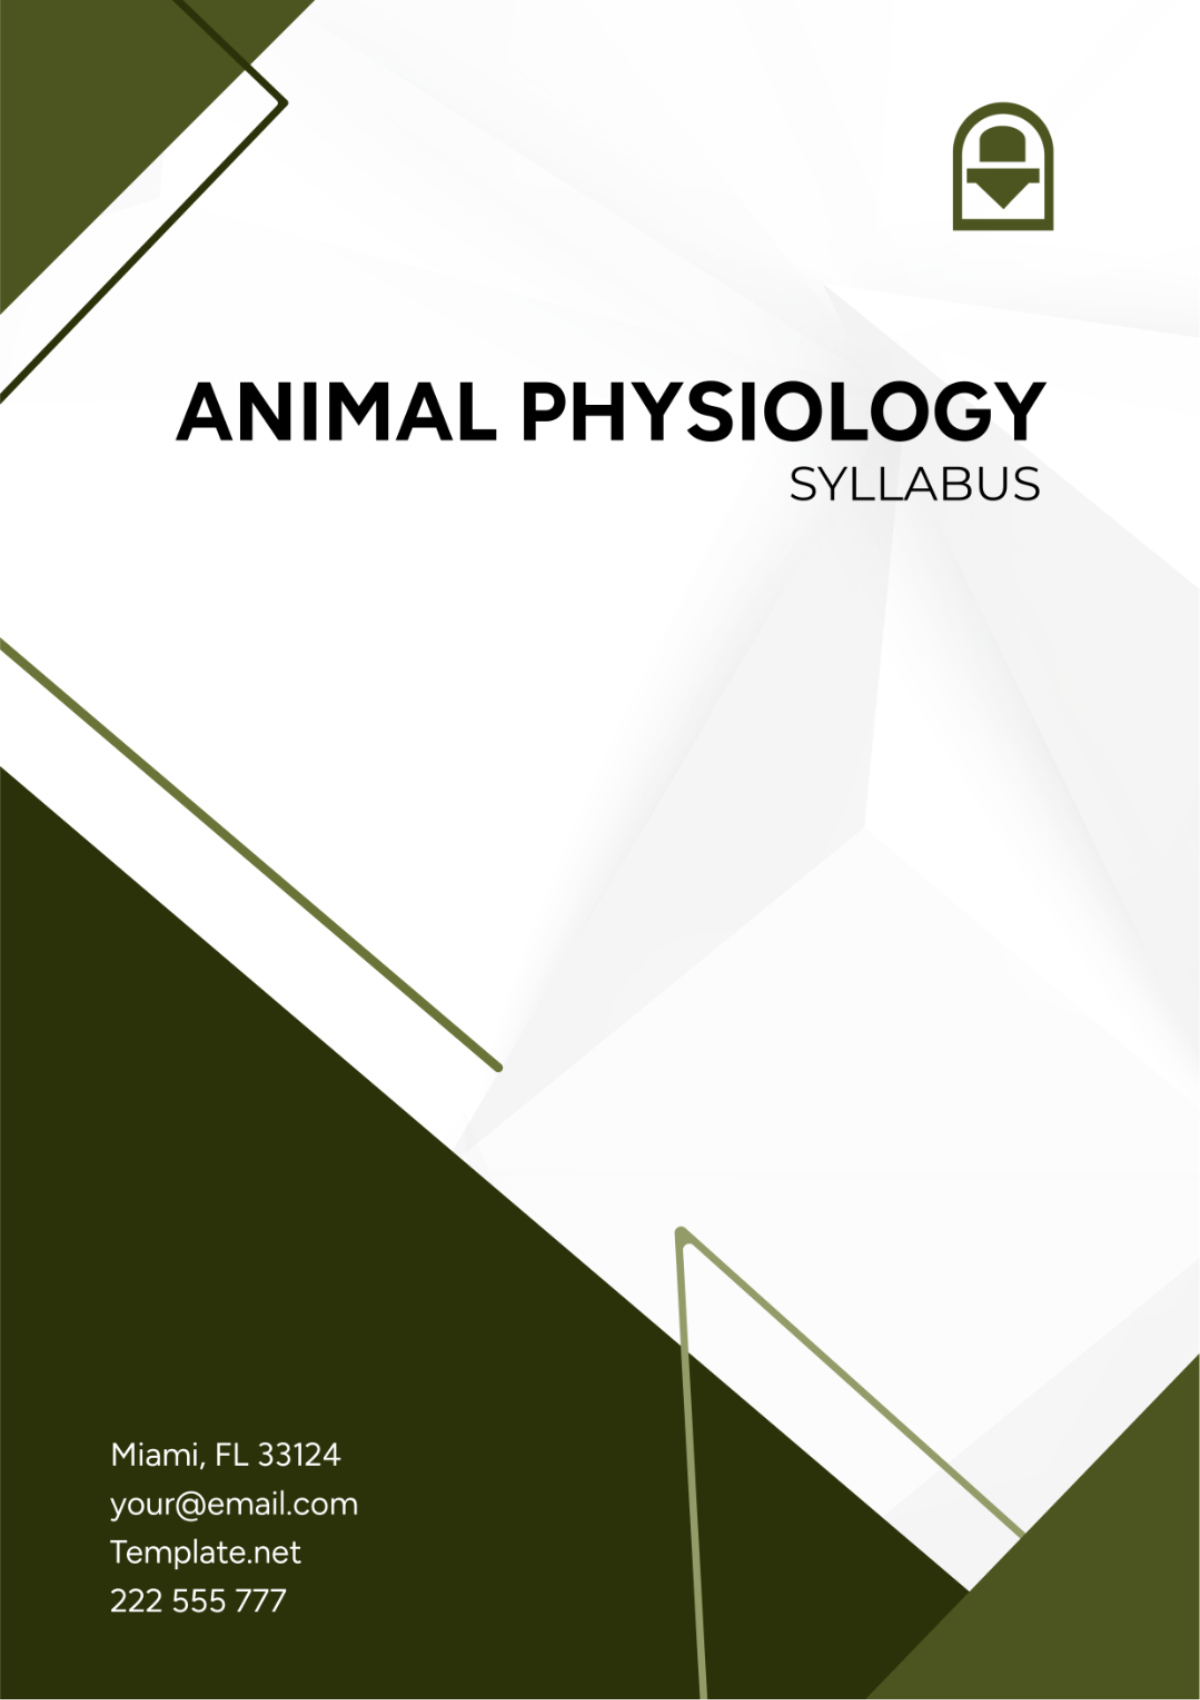 Animal Physiology Syllabus Template